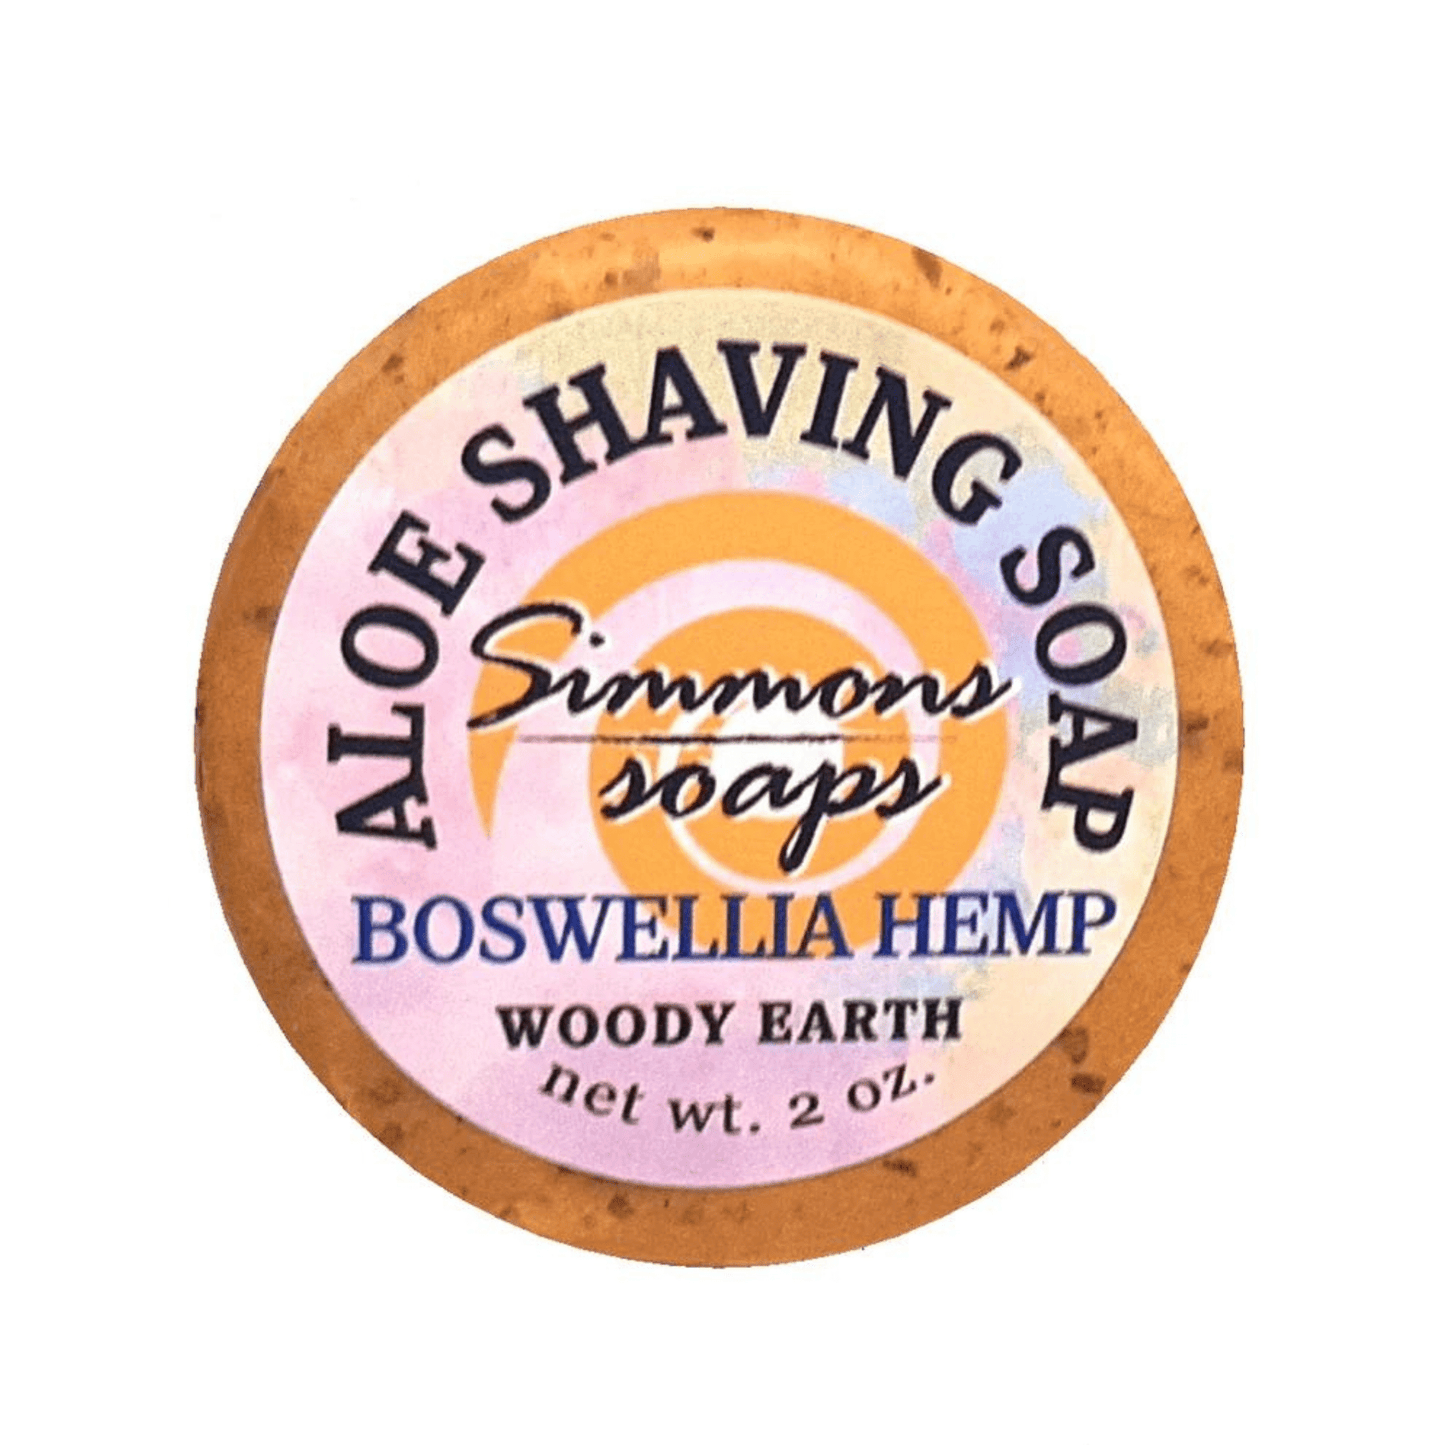 Primary Image of Boswellia Hemp Shaving Soap